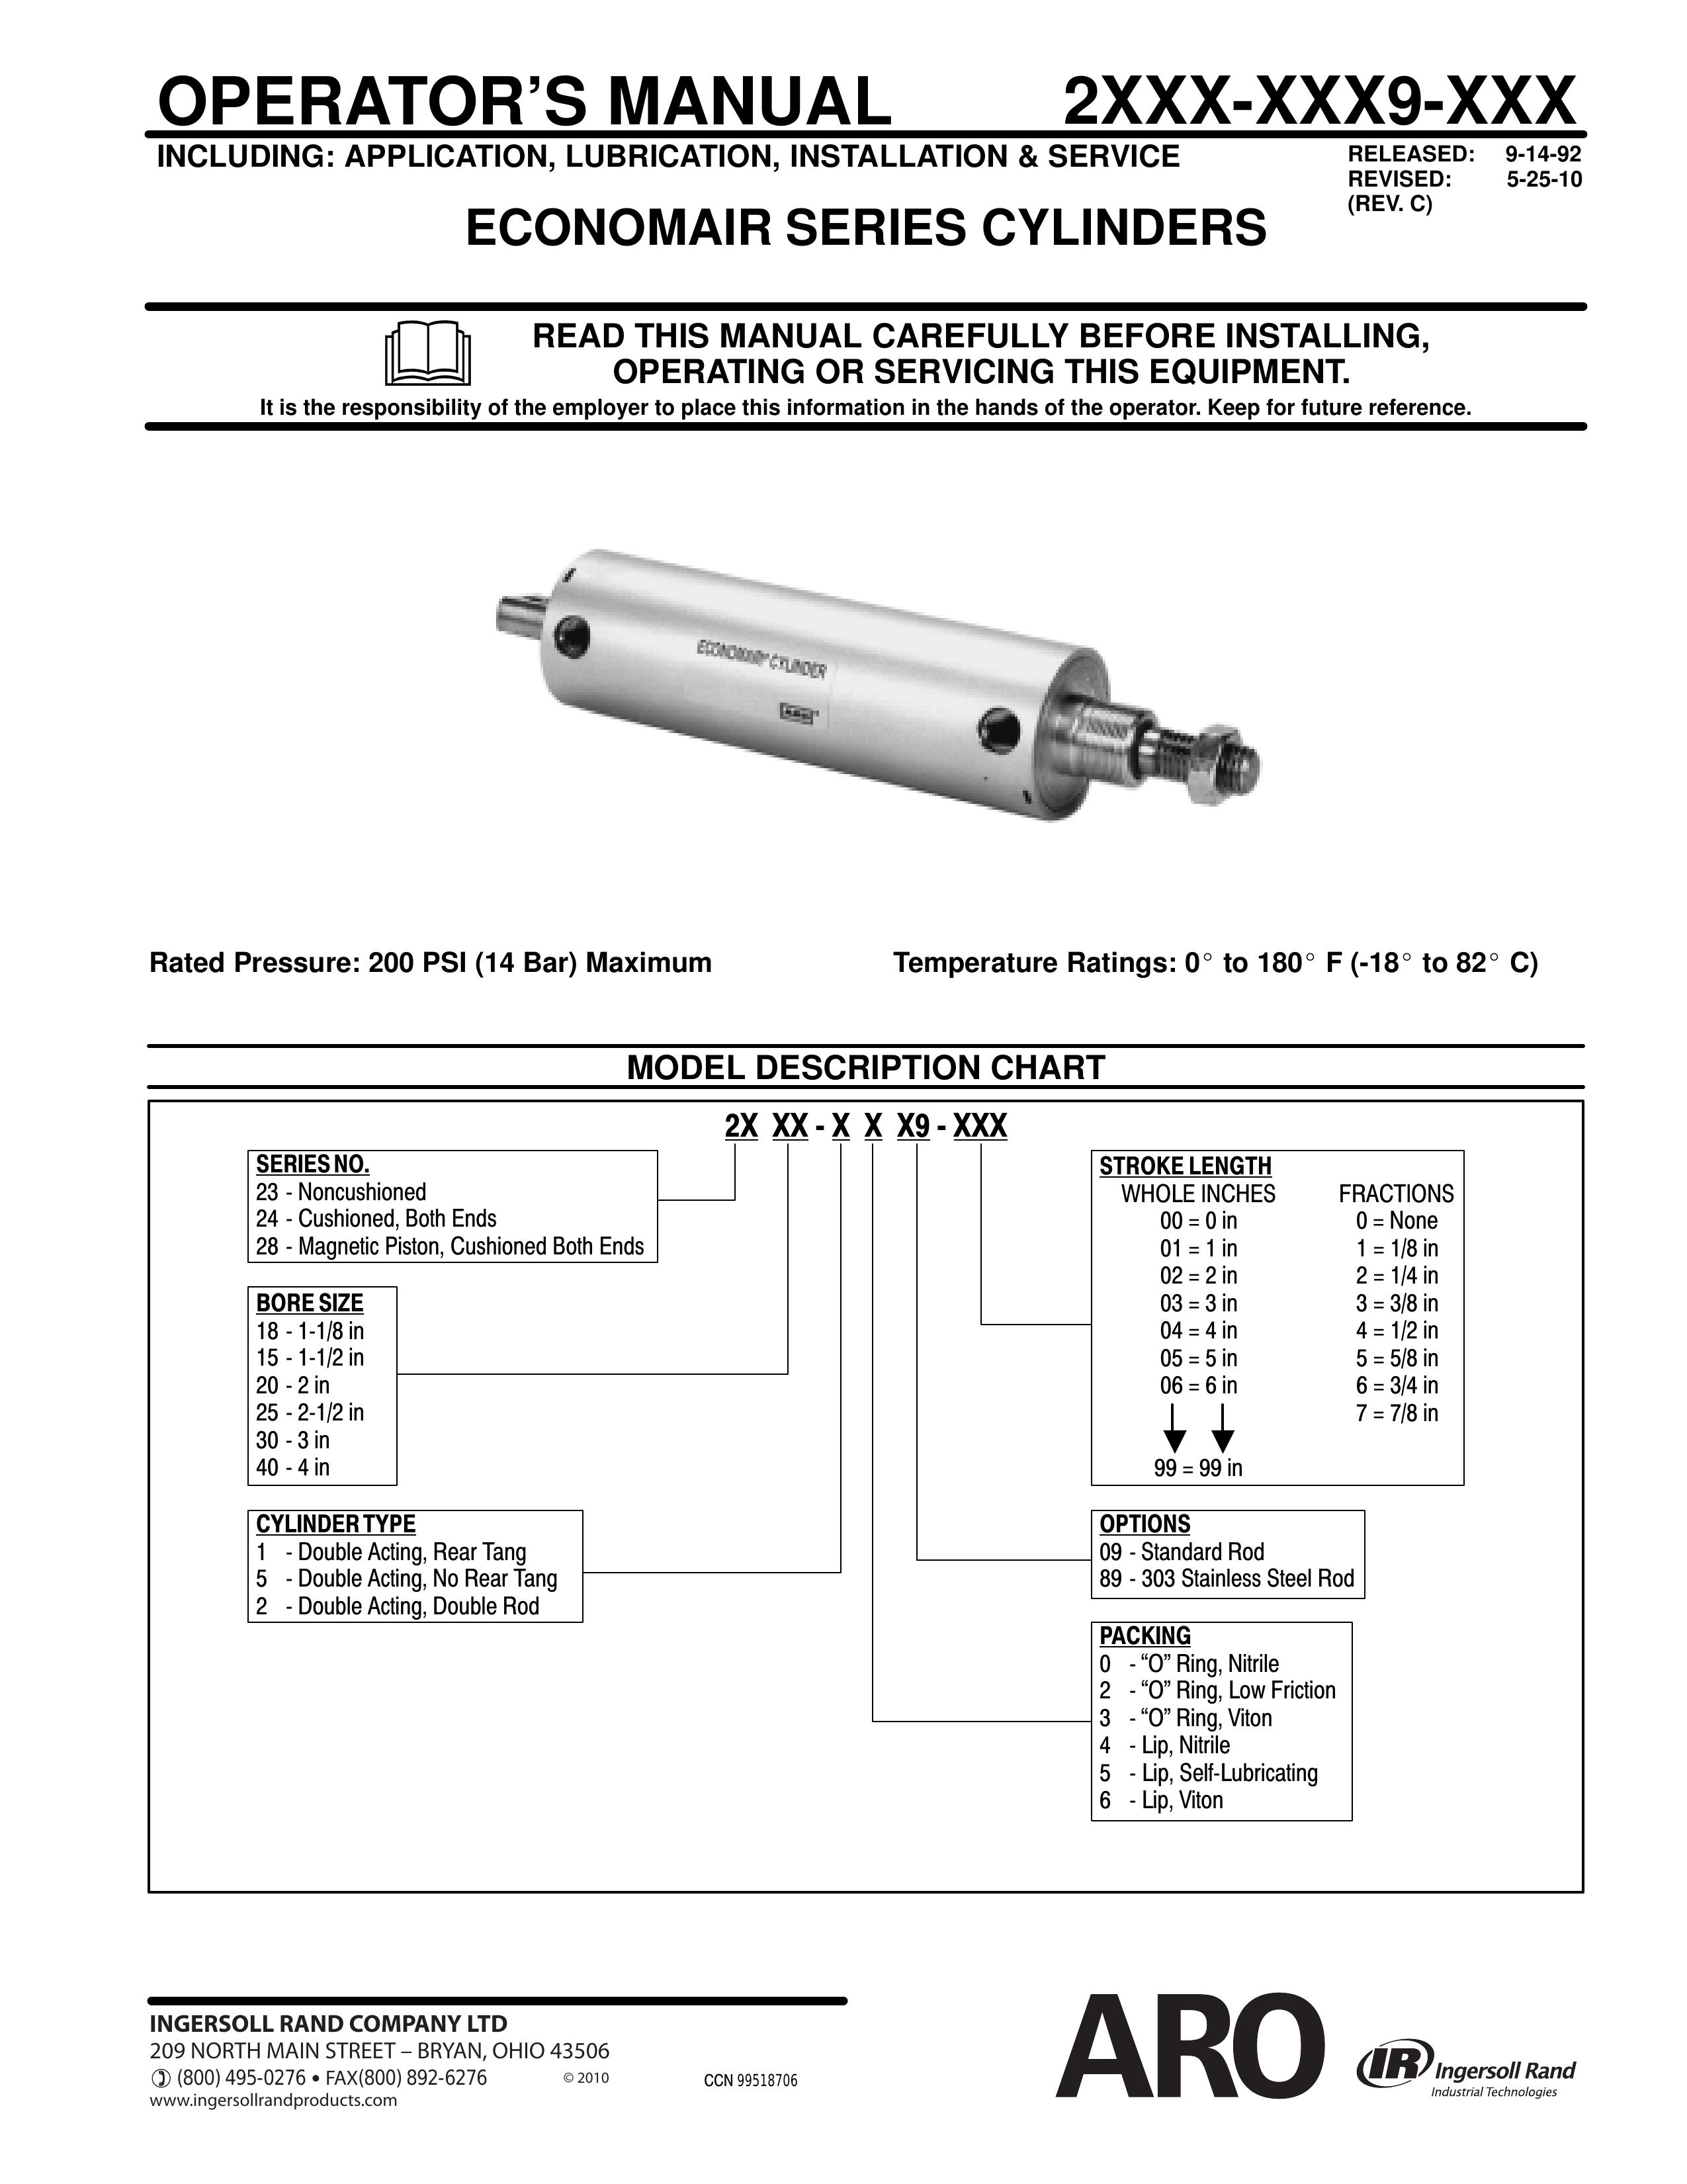 Ingersoll-Rand 2XXX-XXX9-XXX Marine Safety Devices User Manual